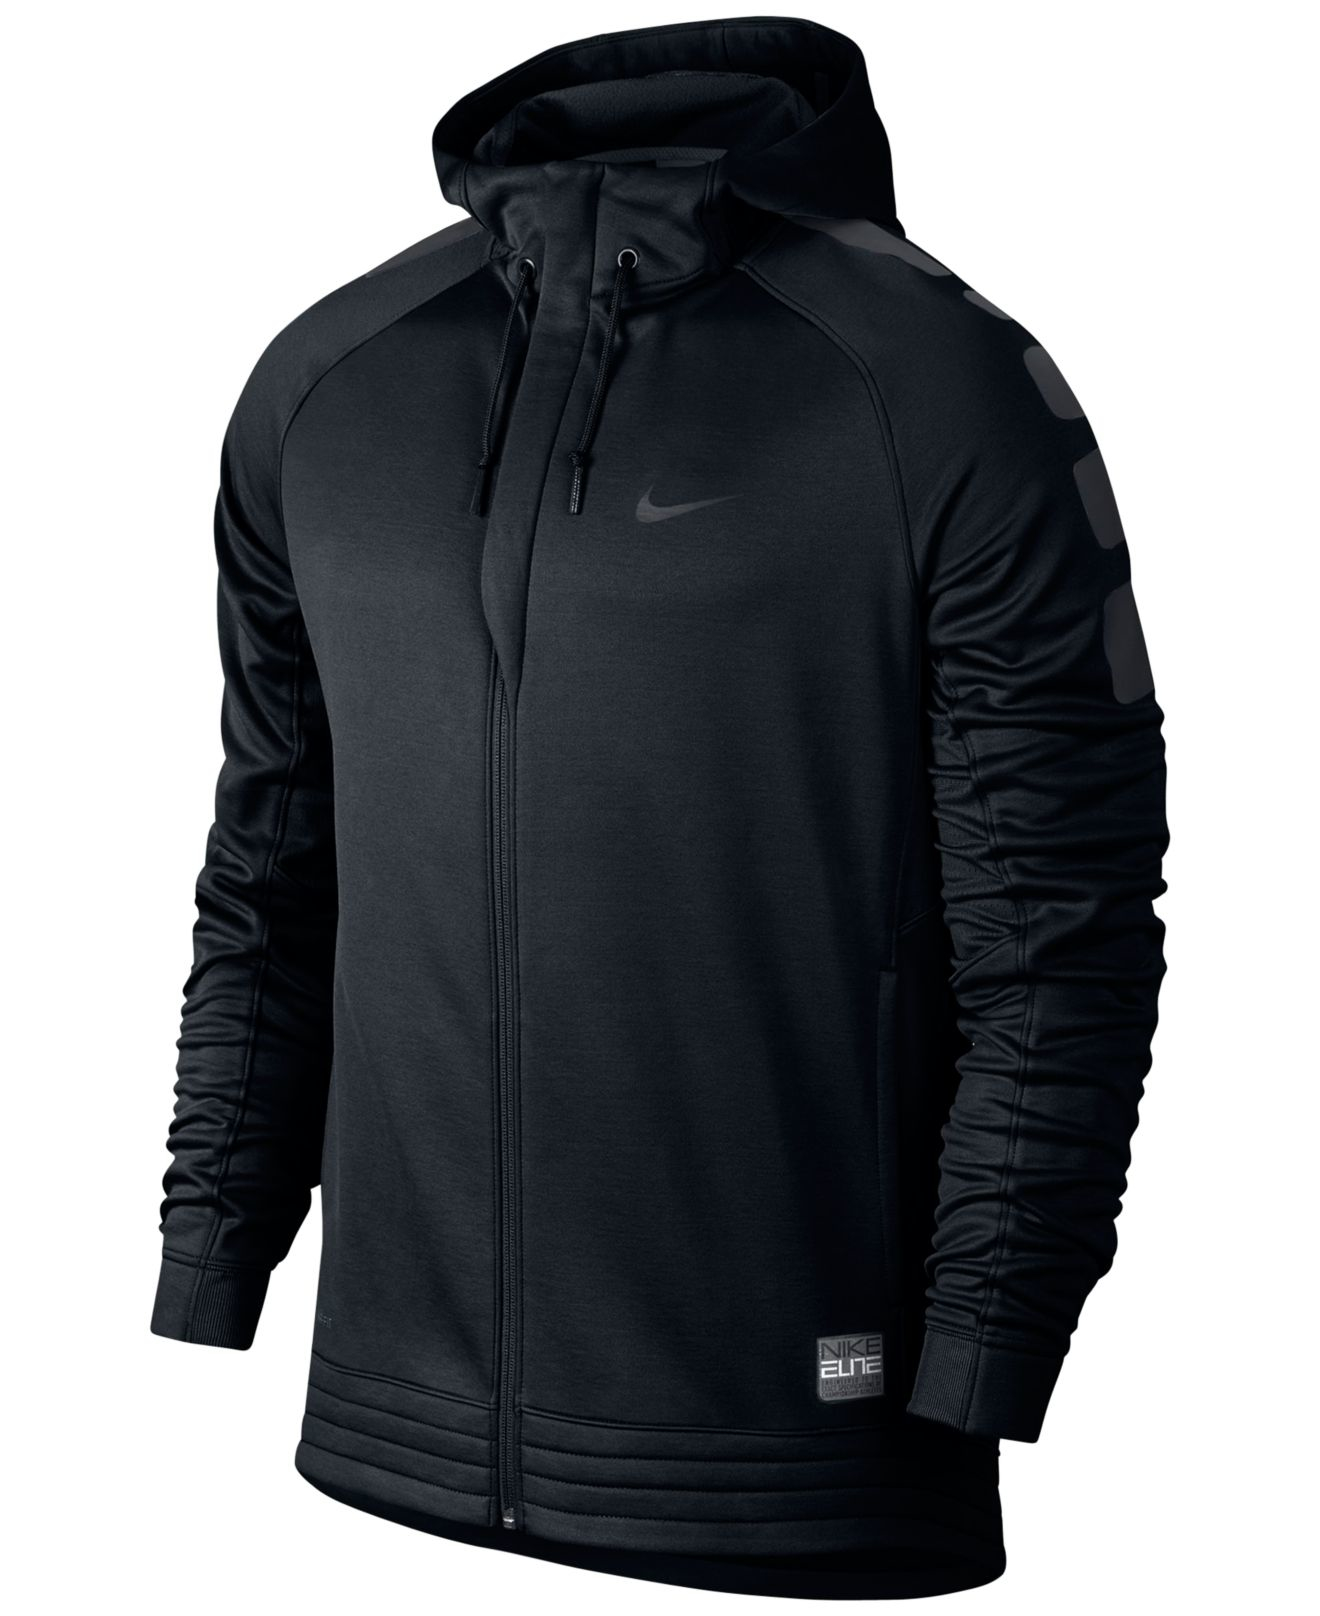 Lyst - Nike Men's Elite Striped Full-zip Basketball Hoodie in Black for Men